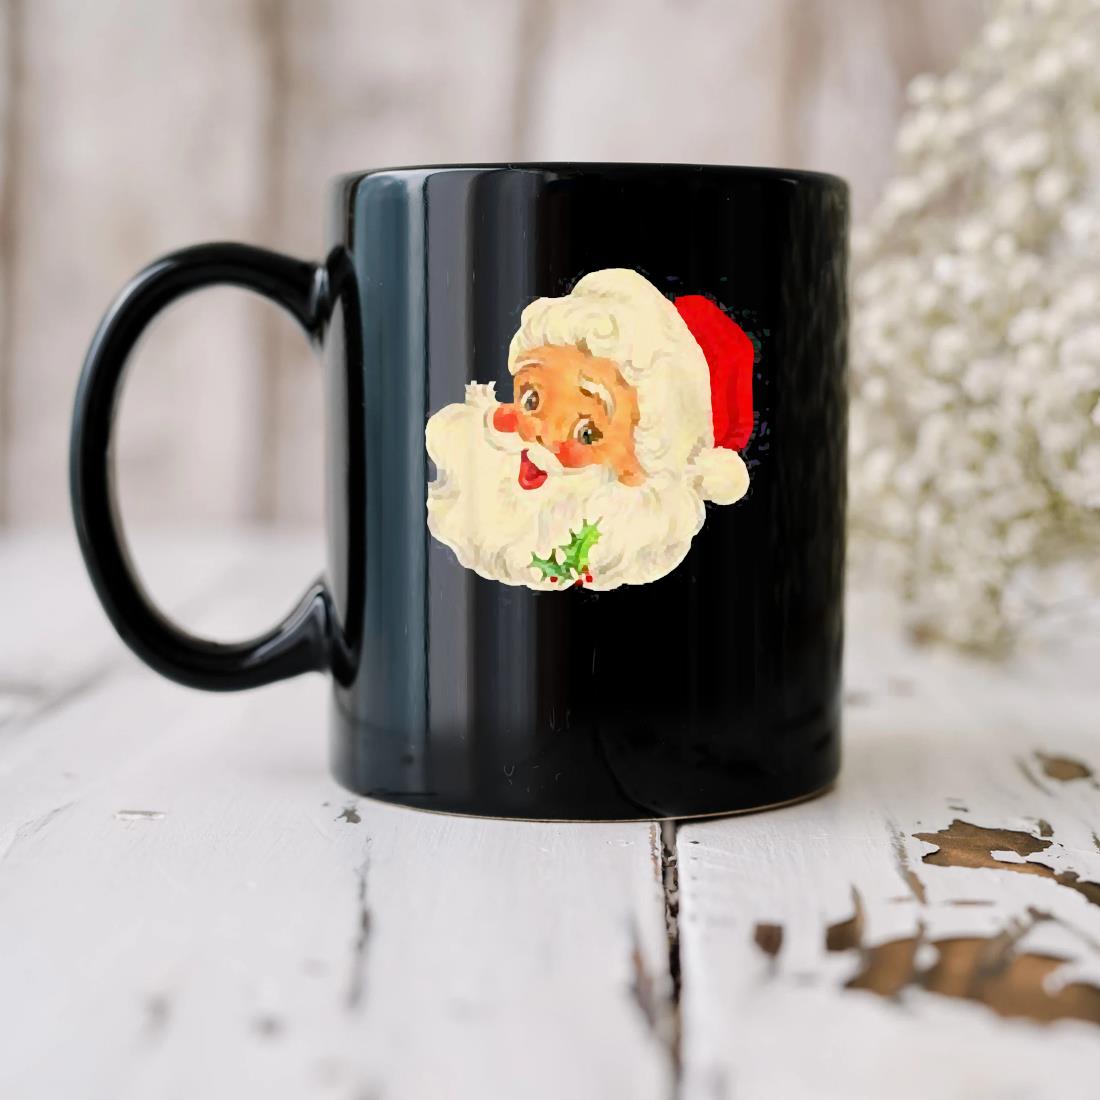 Cool Vintage Christmas Santa Claus Face Mug biu